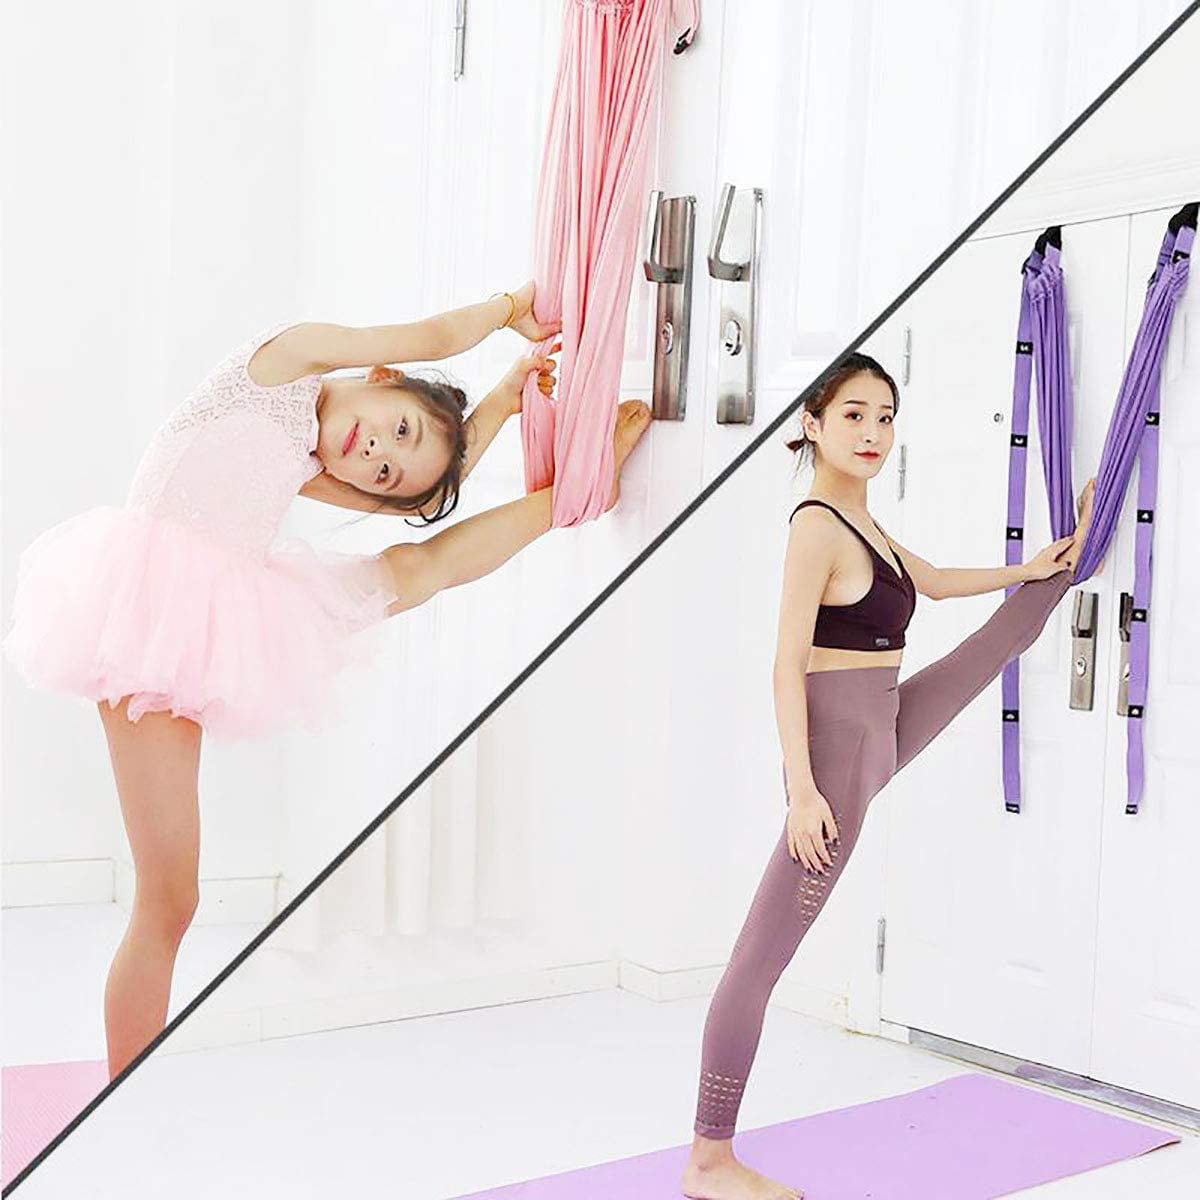 Door Swing Adjustable Strap Back Bend Aerial Yoga Strap Go Upside-Down for Yoga Practitioner Ballet Dancer Gymnastics Relieve Pain Stiffness Fitness Strap Band for Waist Trainer Leg Stretching